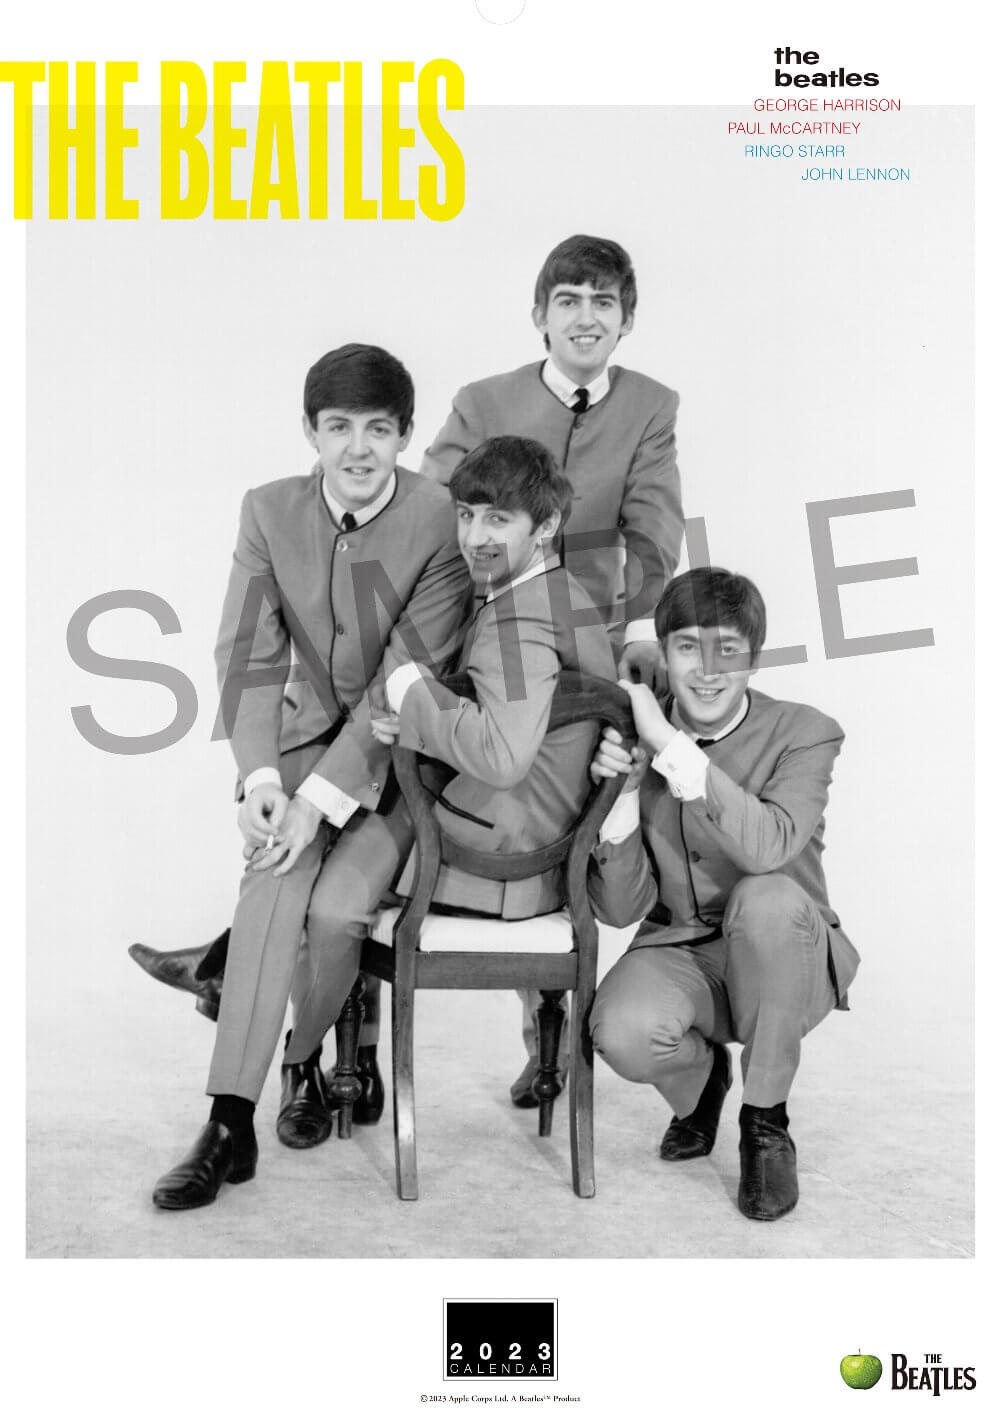 The Beatles Calendar Sample